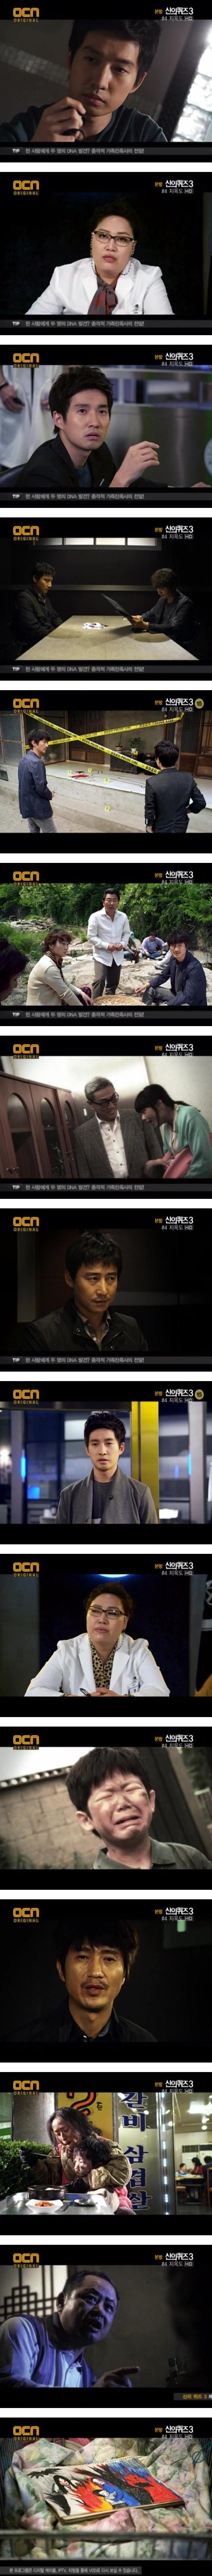 episode 4 captures for the Korean drama 'God's Quiz Season 3'